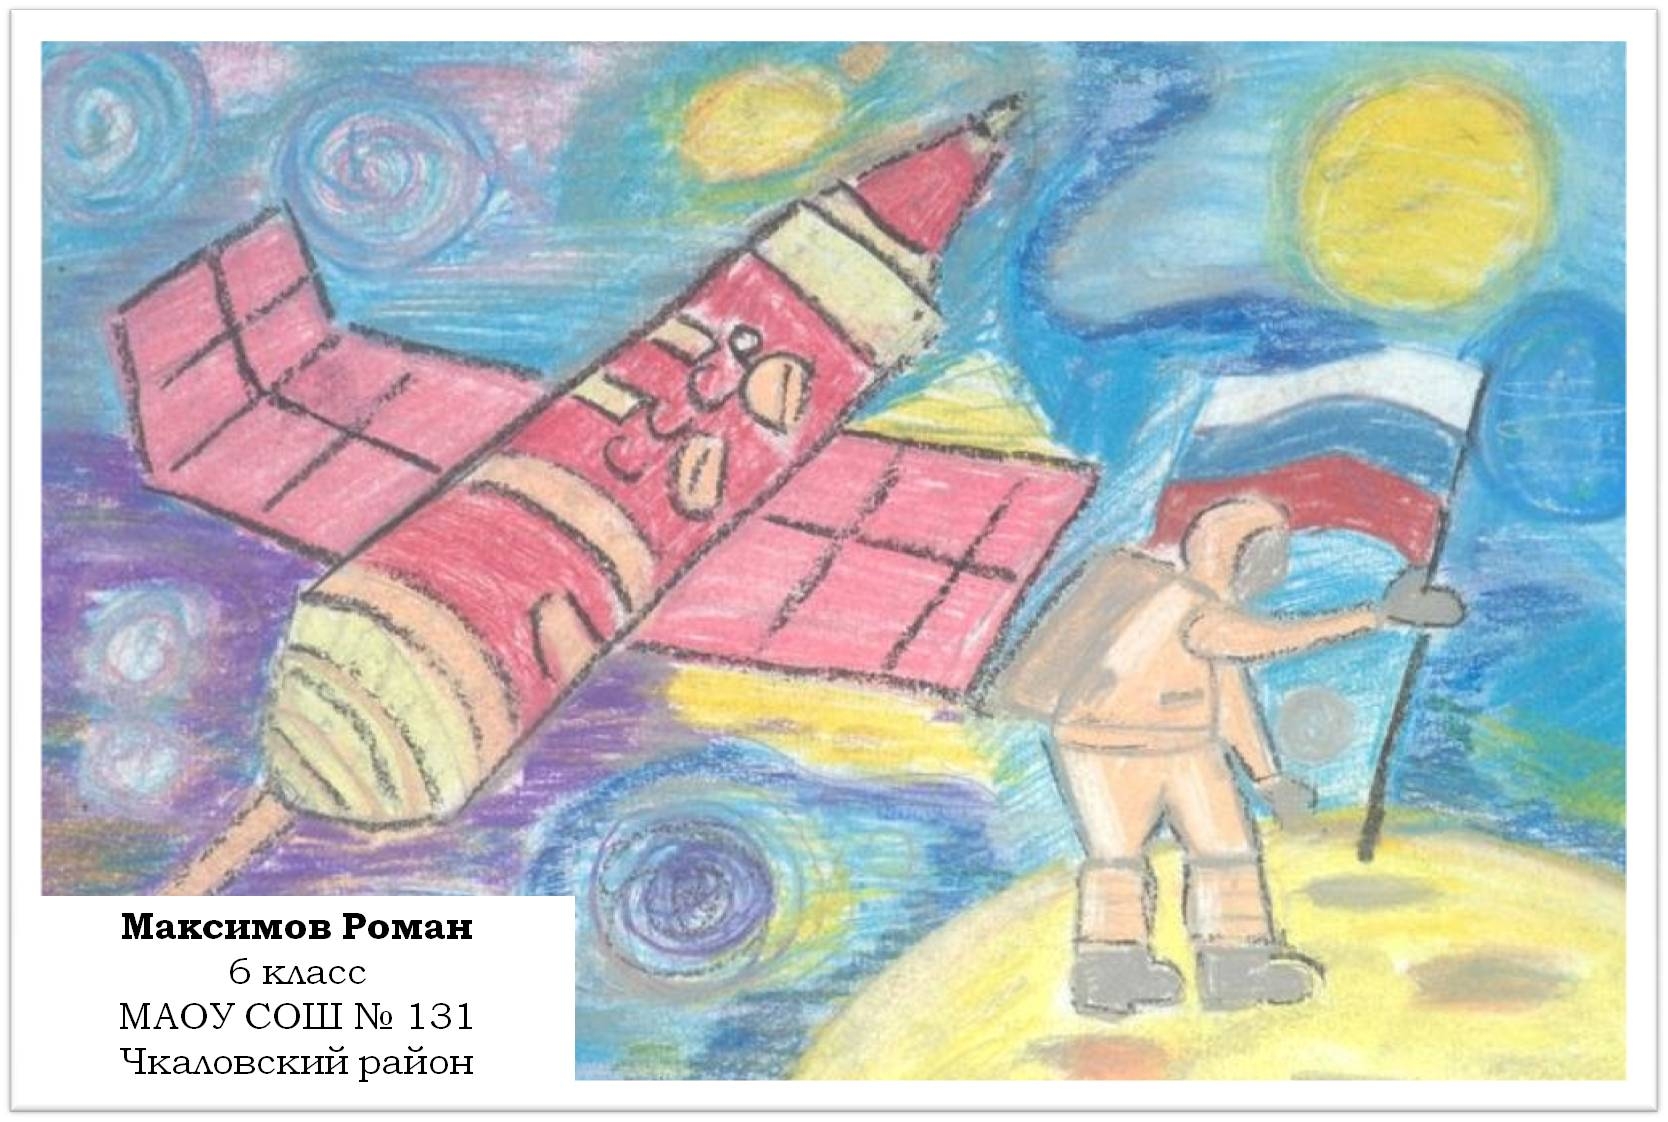 Рисунок на тему космонавтики 5 класс. Рисунок на тему космос. Рисунок на тему космонавтики. Рисунок на космическую тему. Рисунок на тему день космонавтики.